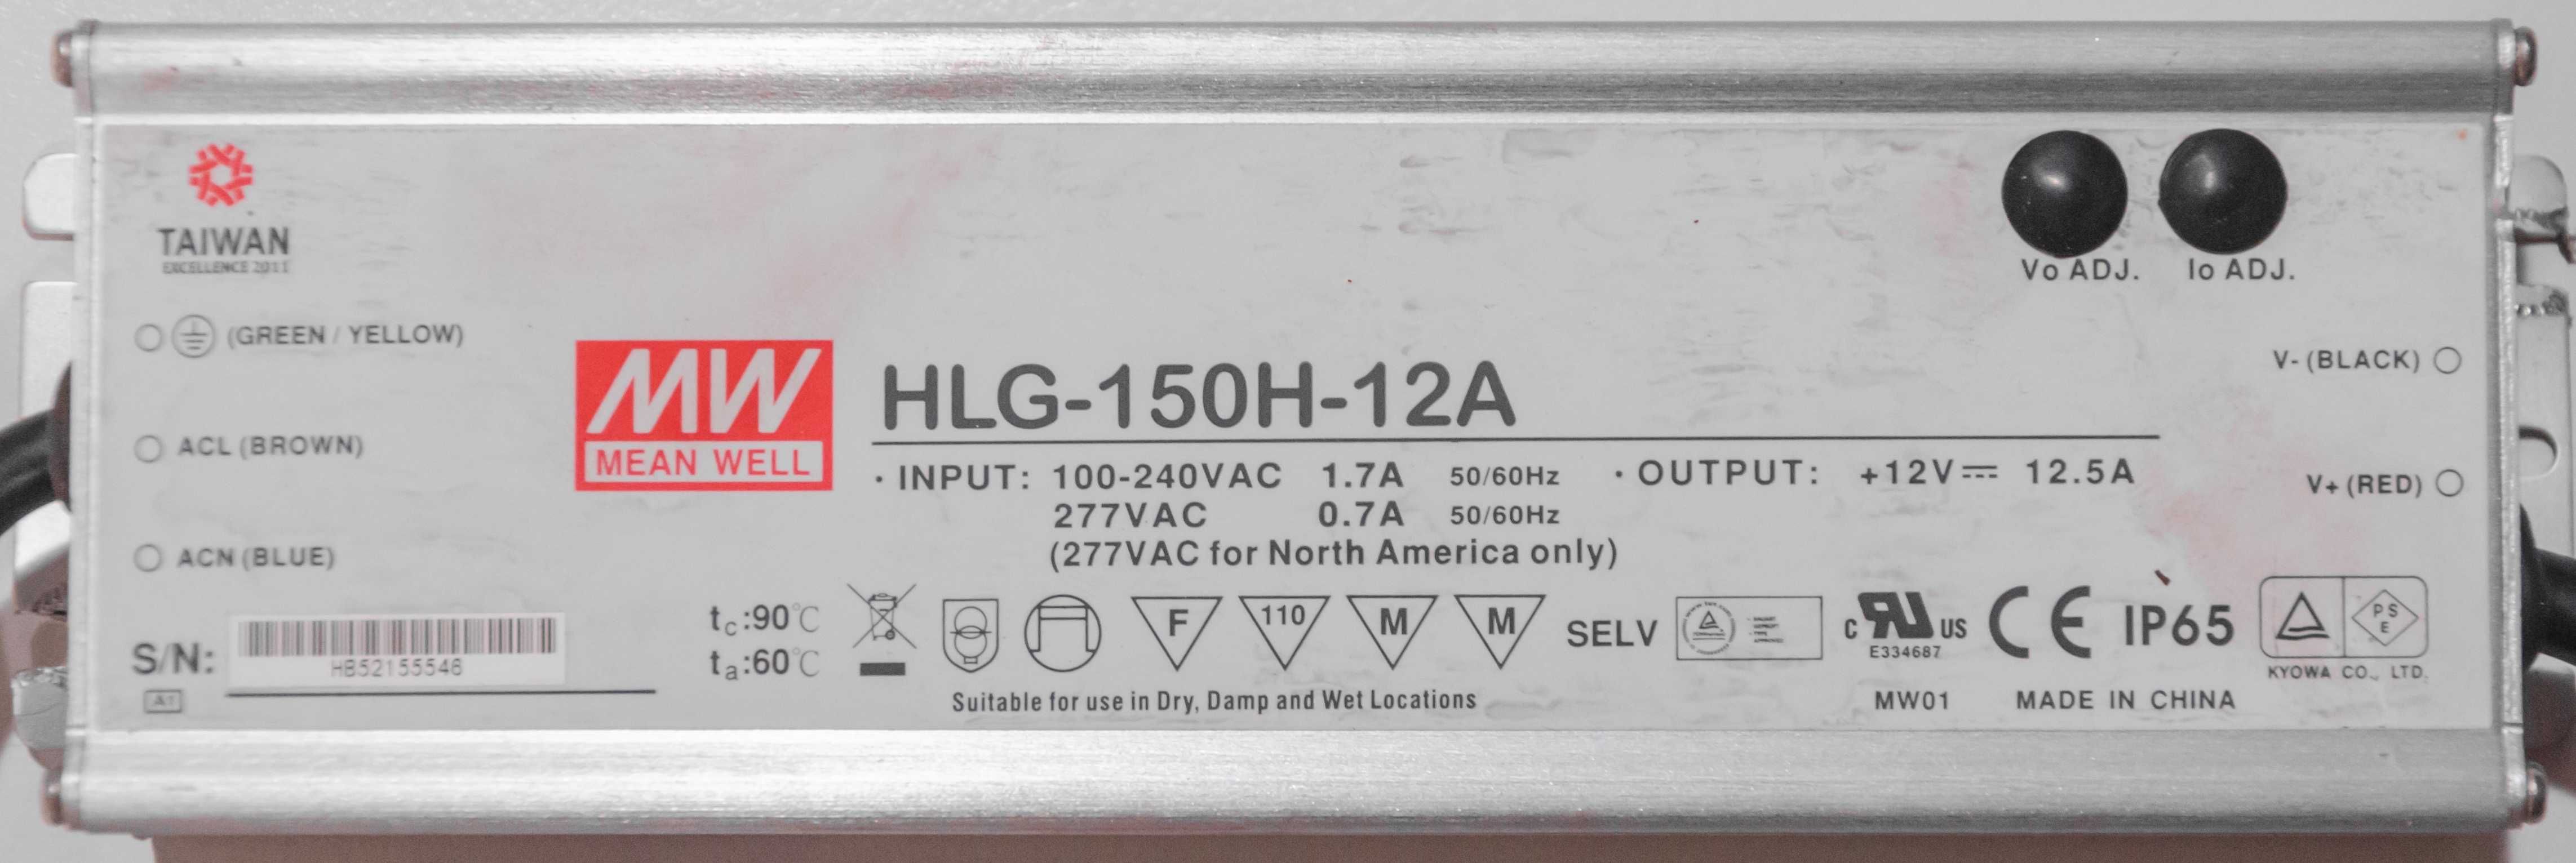 Sterownik Transformator Zasilacz LED Mean Well HLG-150H-12A